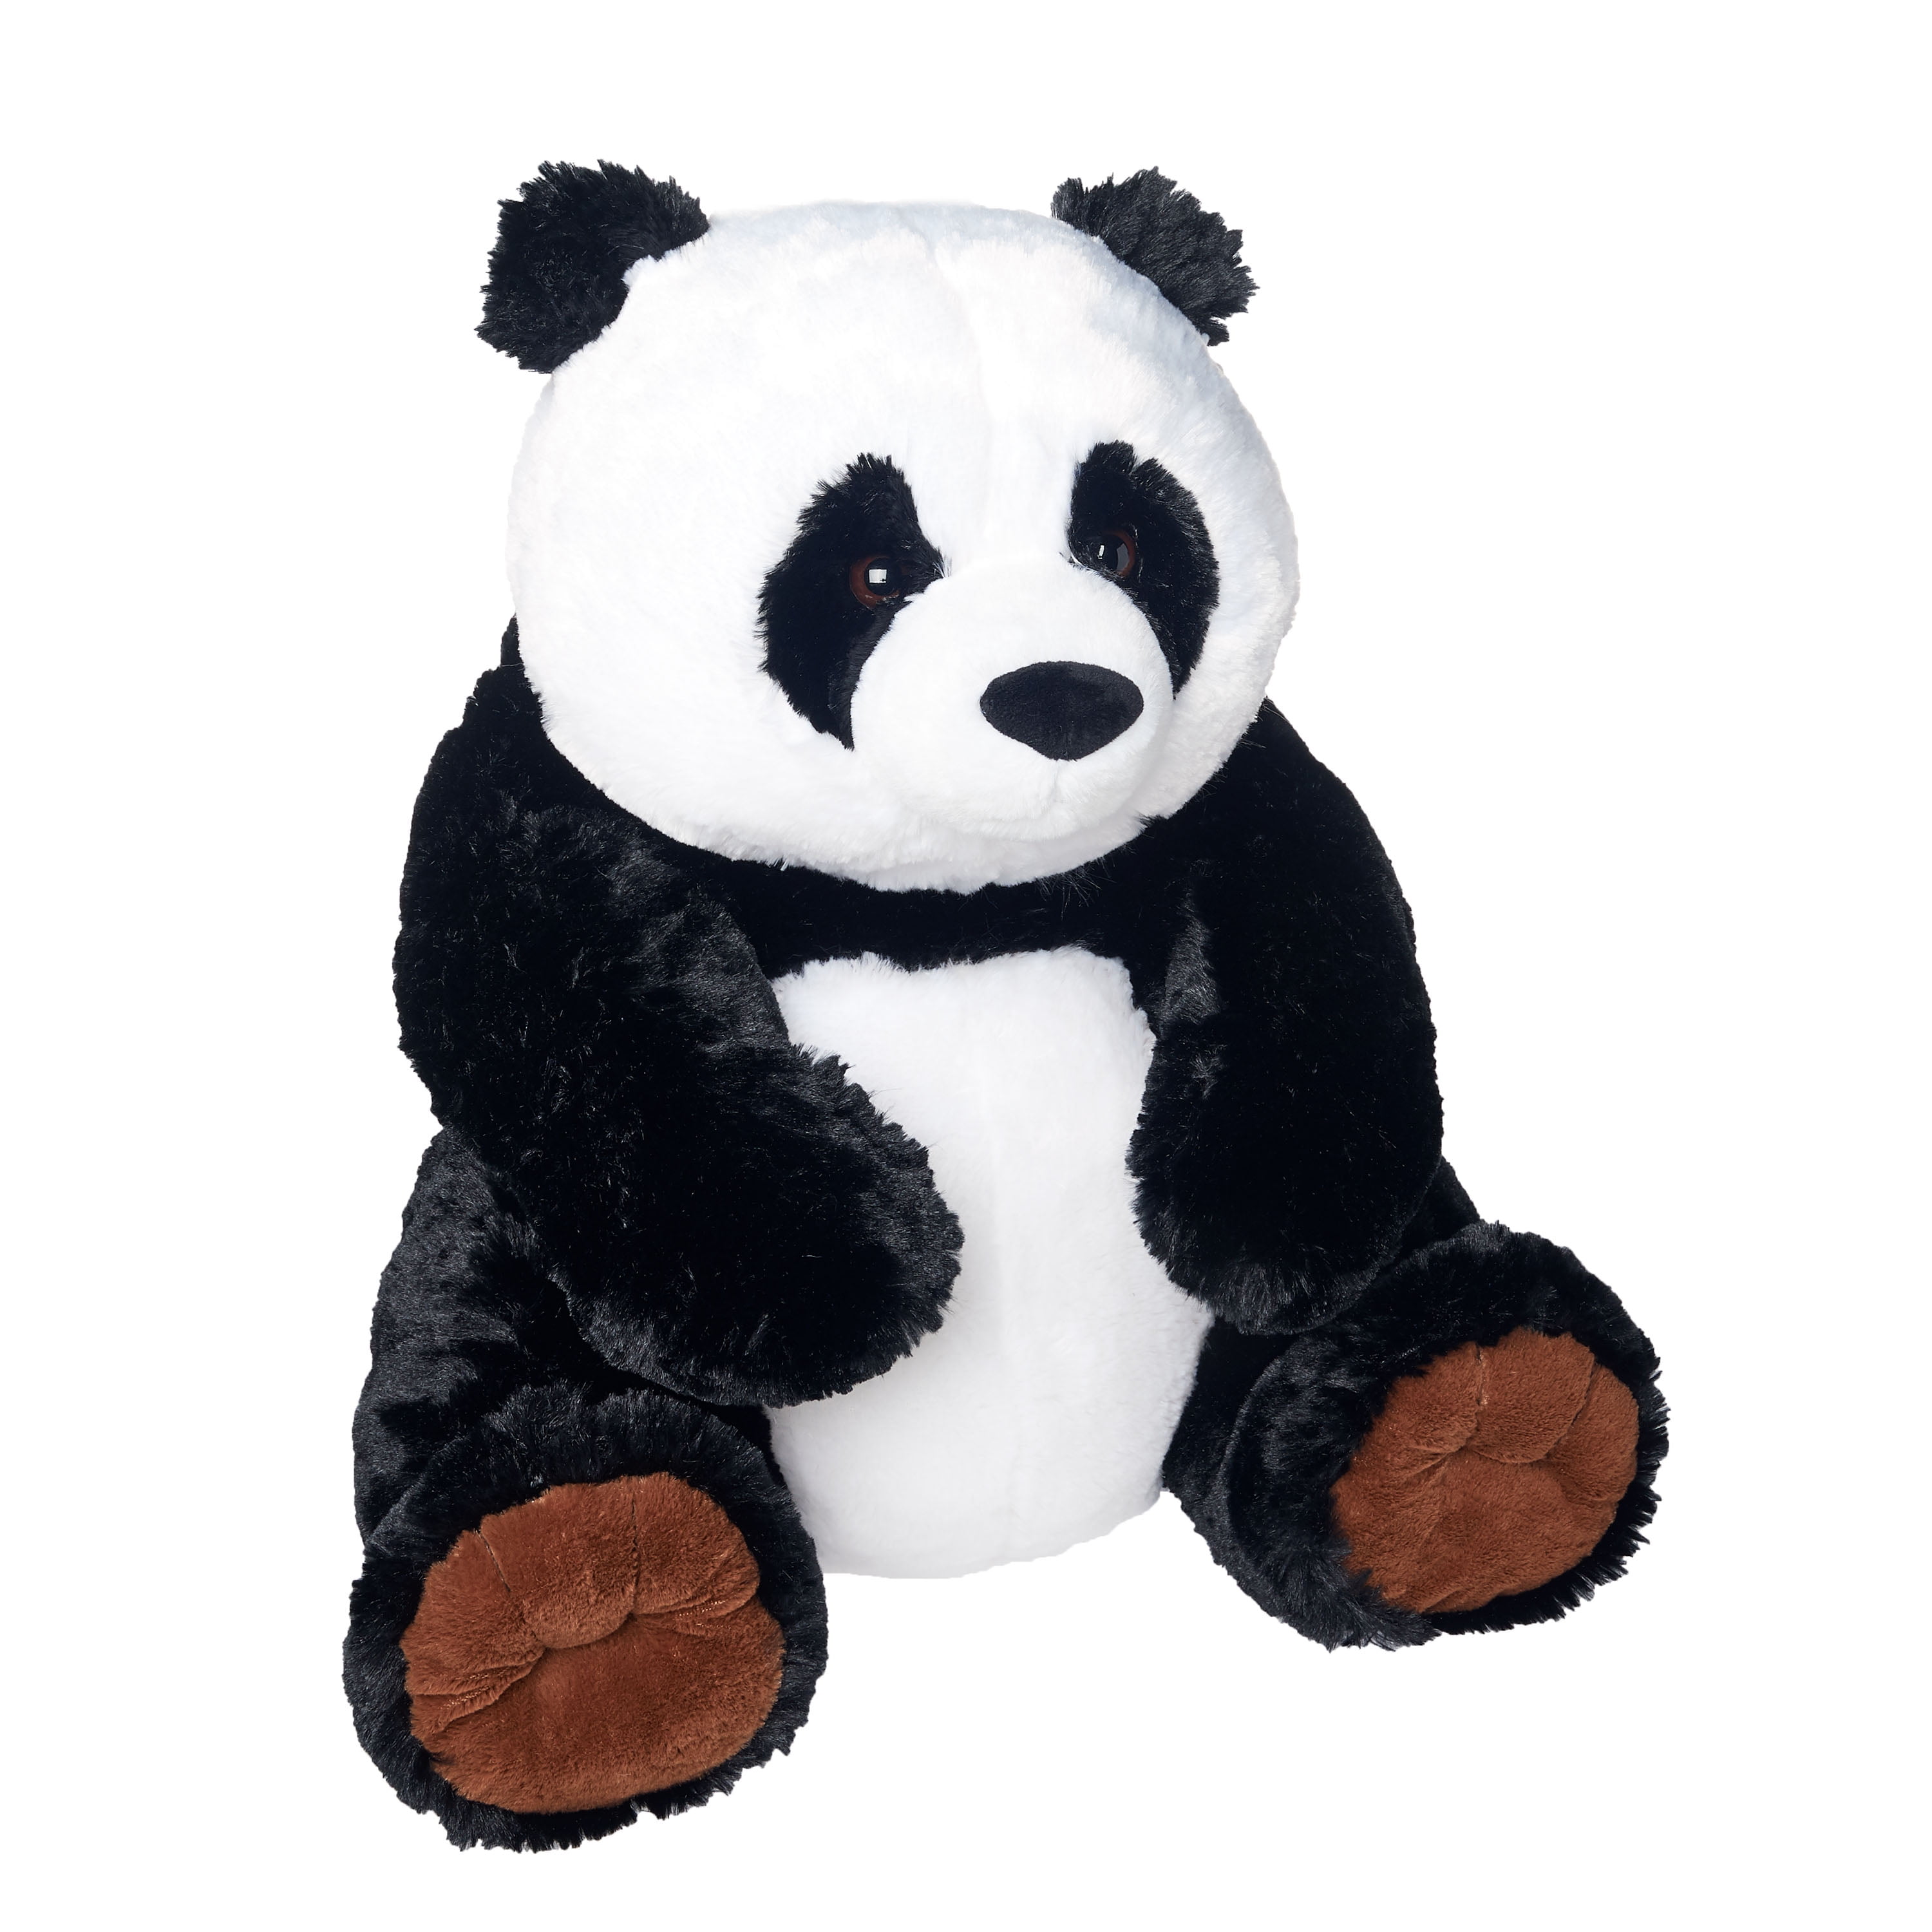 panda stuffed animal near me